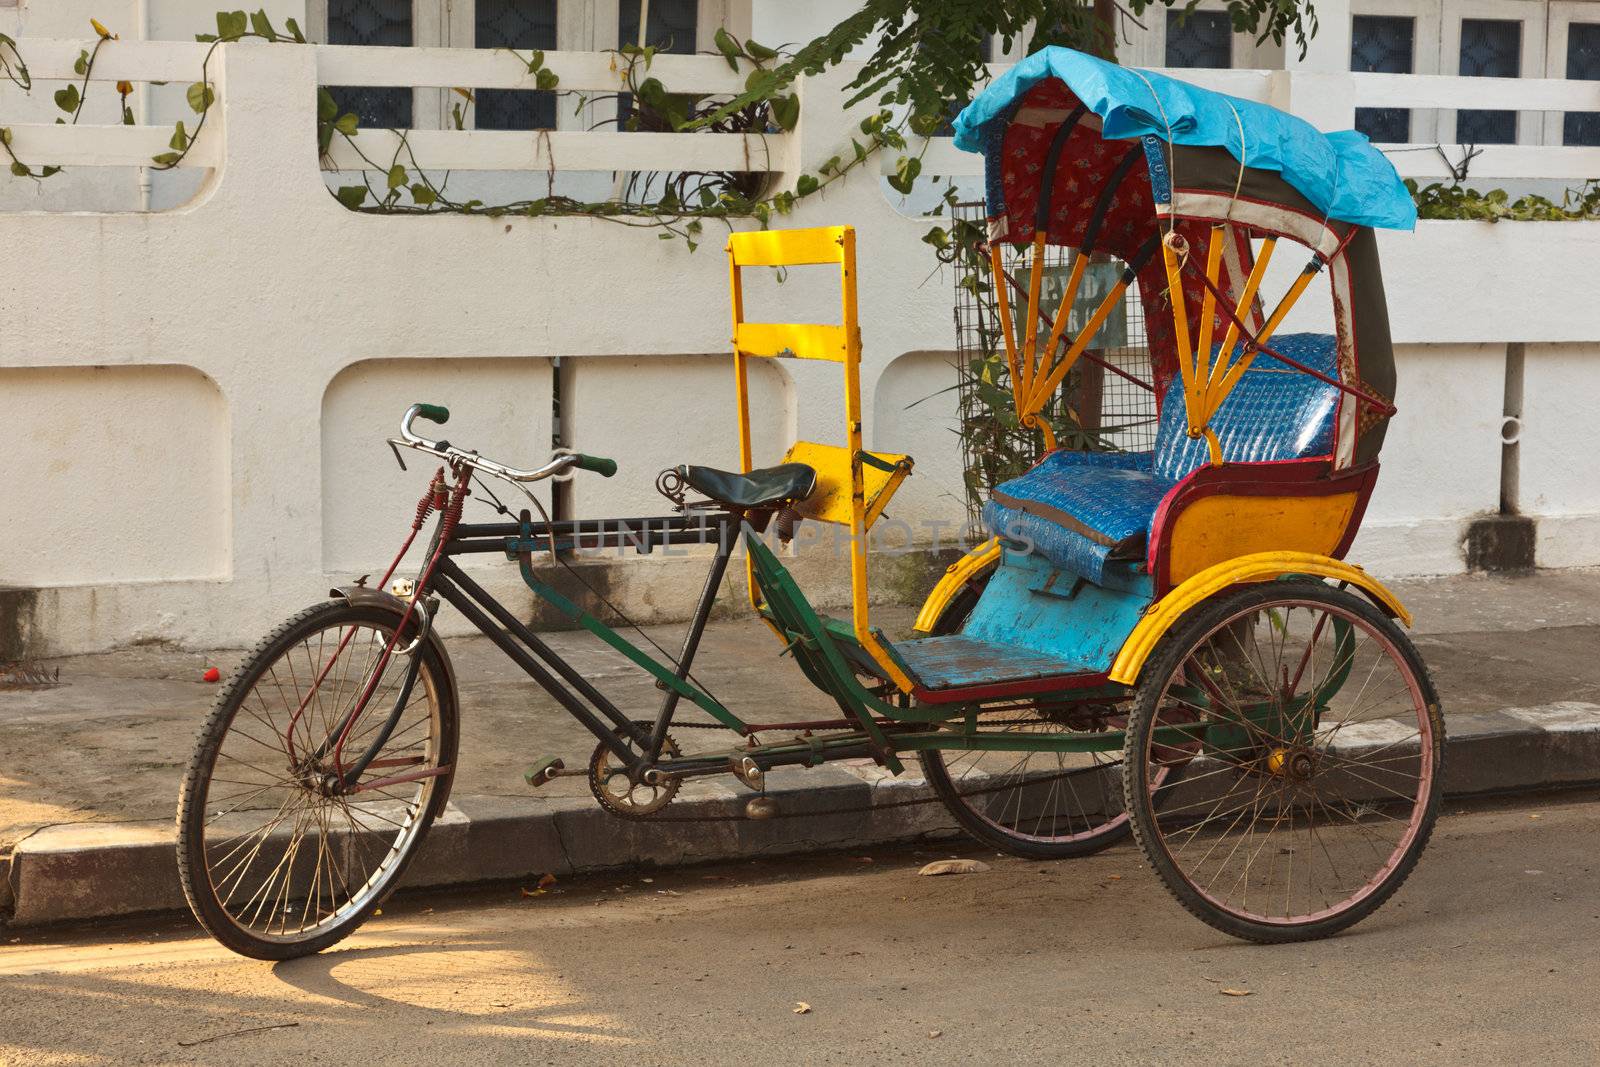 Bicycle rickshaw by dimol